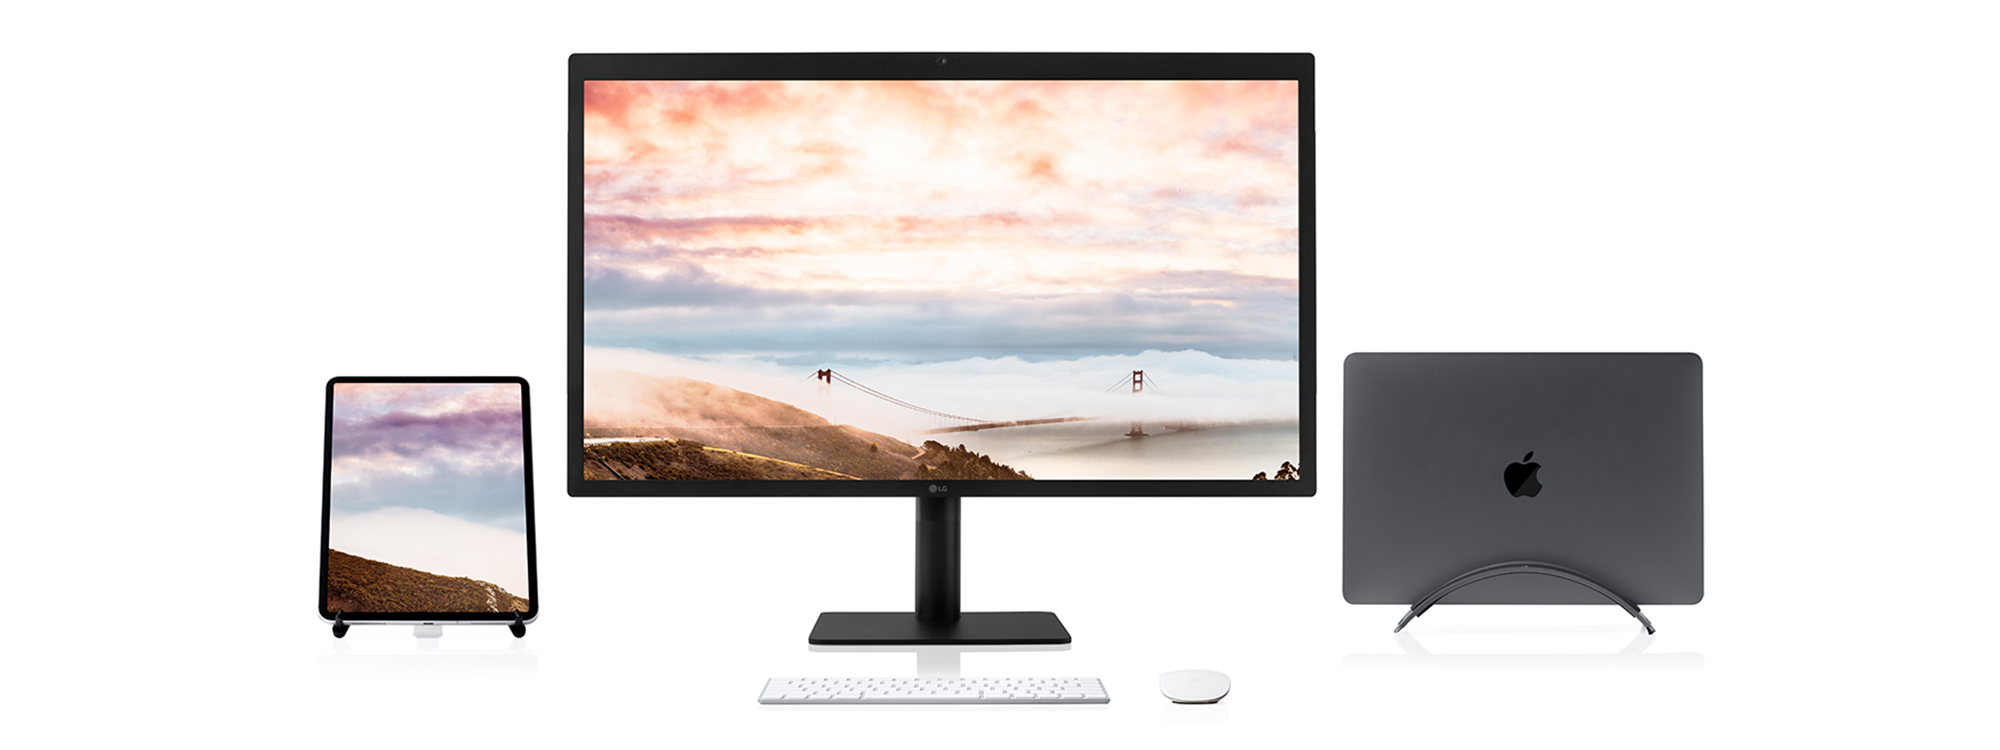 Free Dual Screen Desktop Background Download By Twelve South